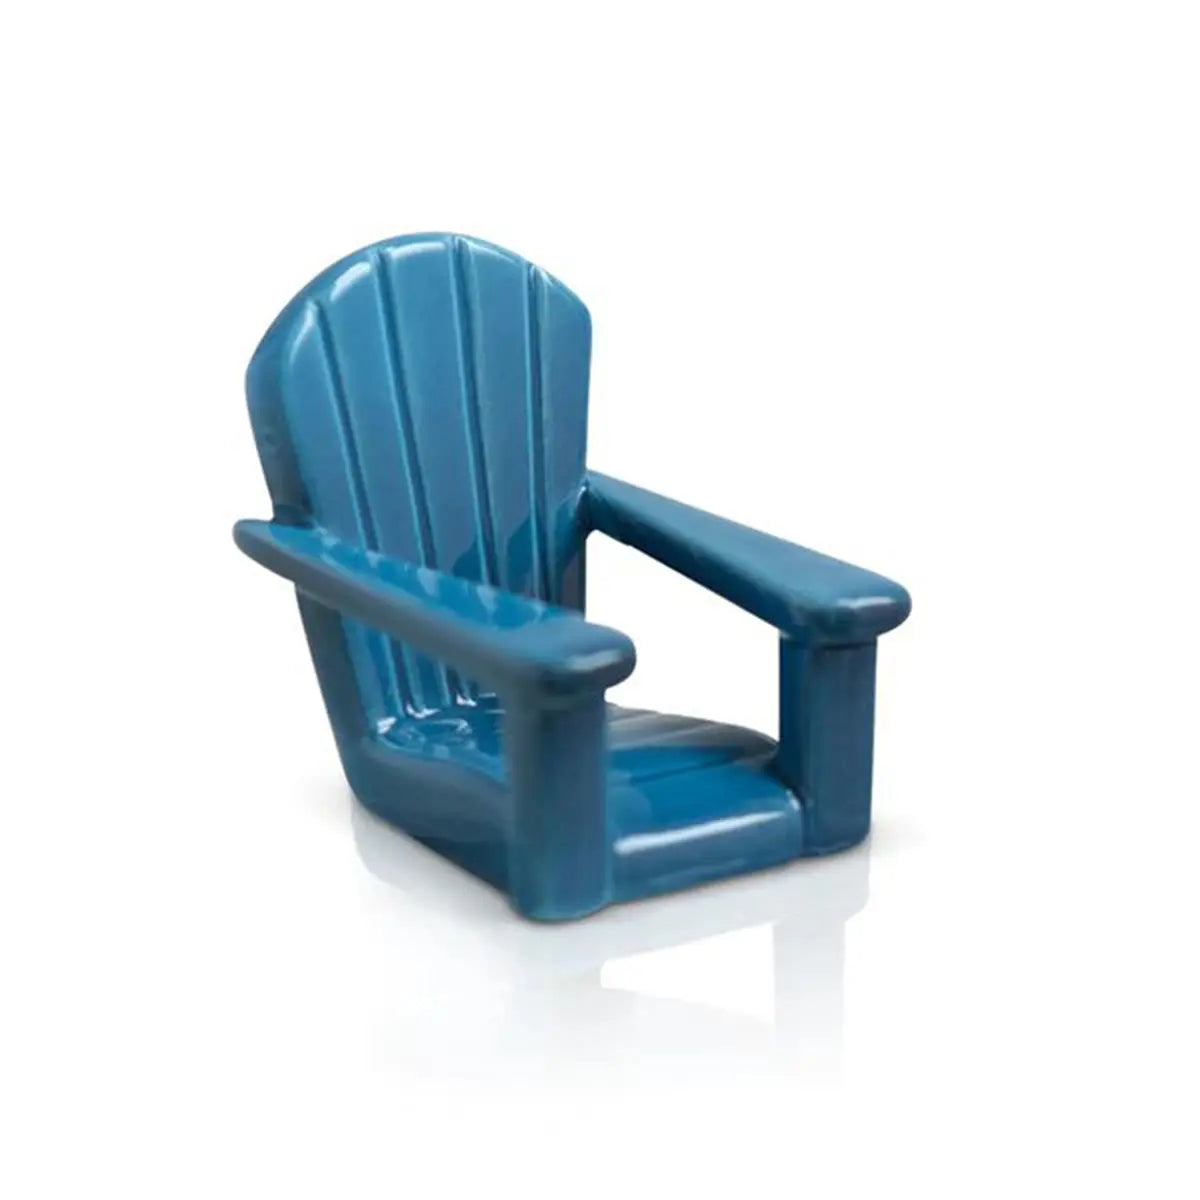 Nora Fleming Chillin Chair Adirondack Chair Mini